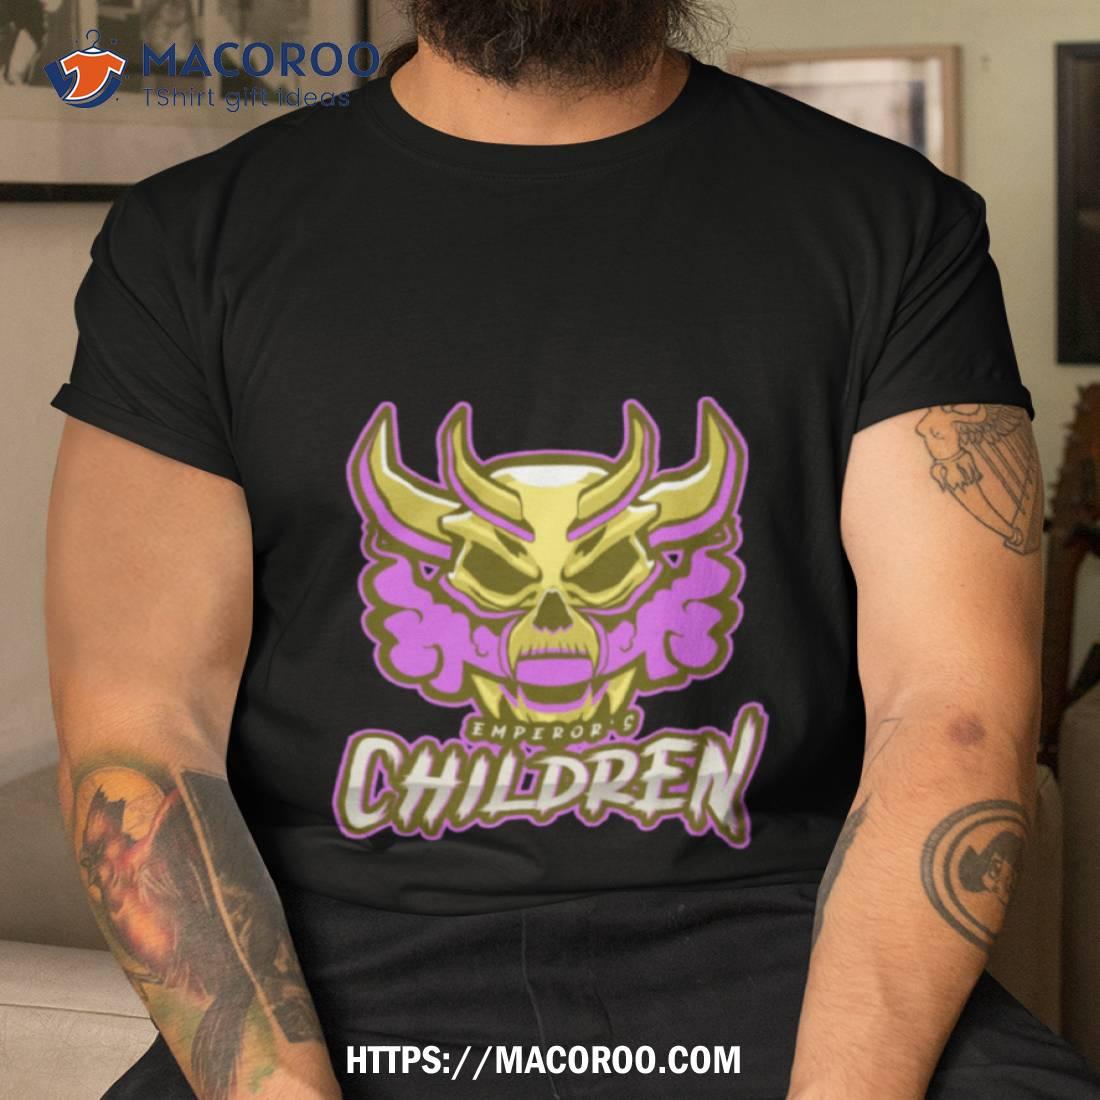 Emperor S Children Logo Shirt Tshirt